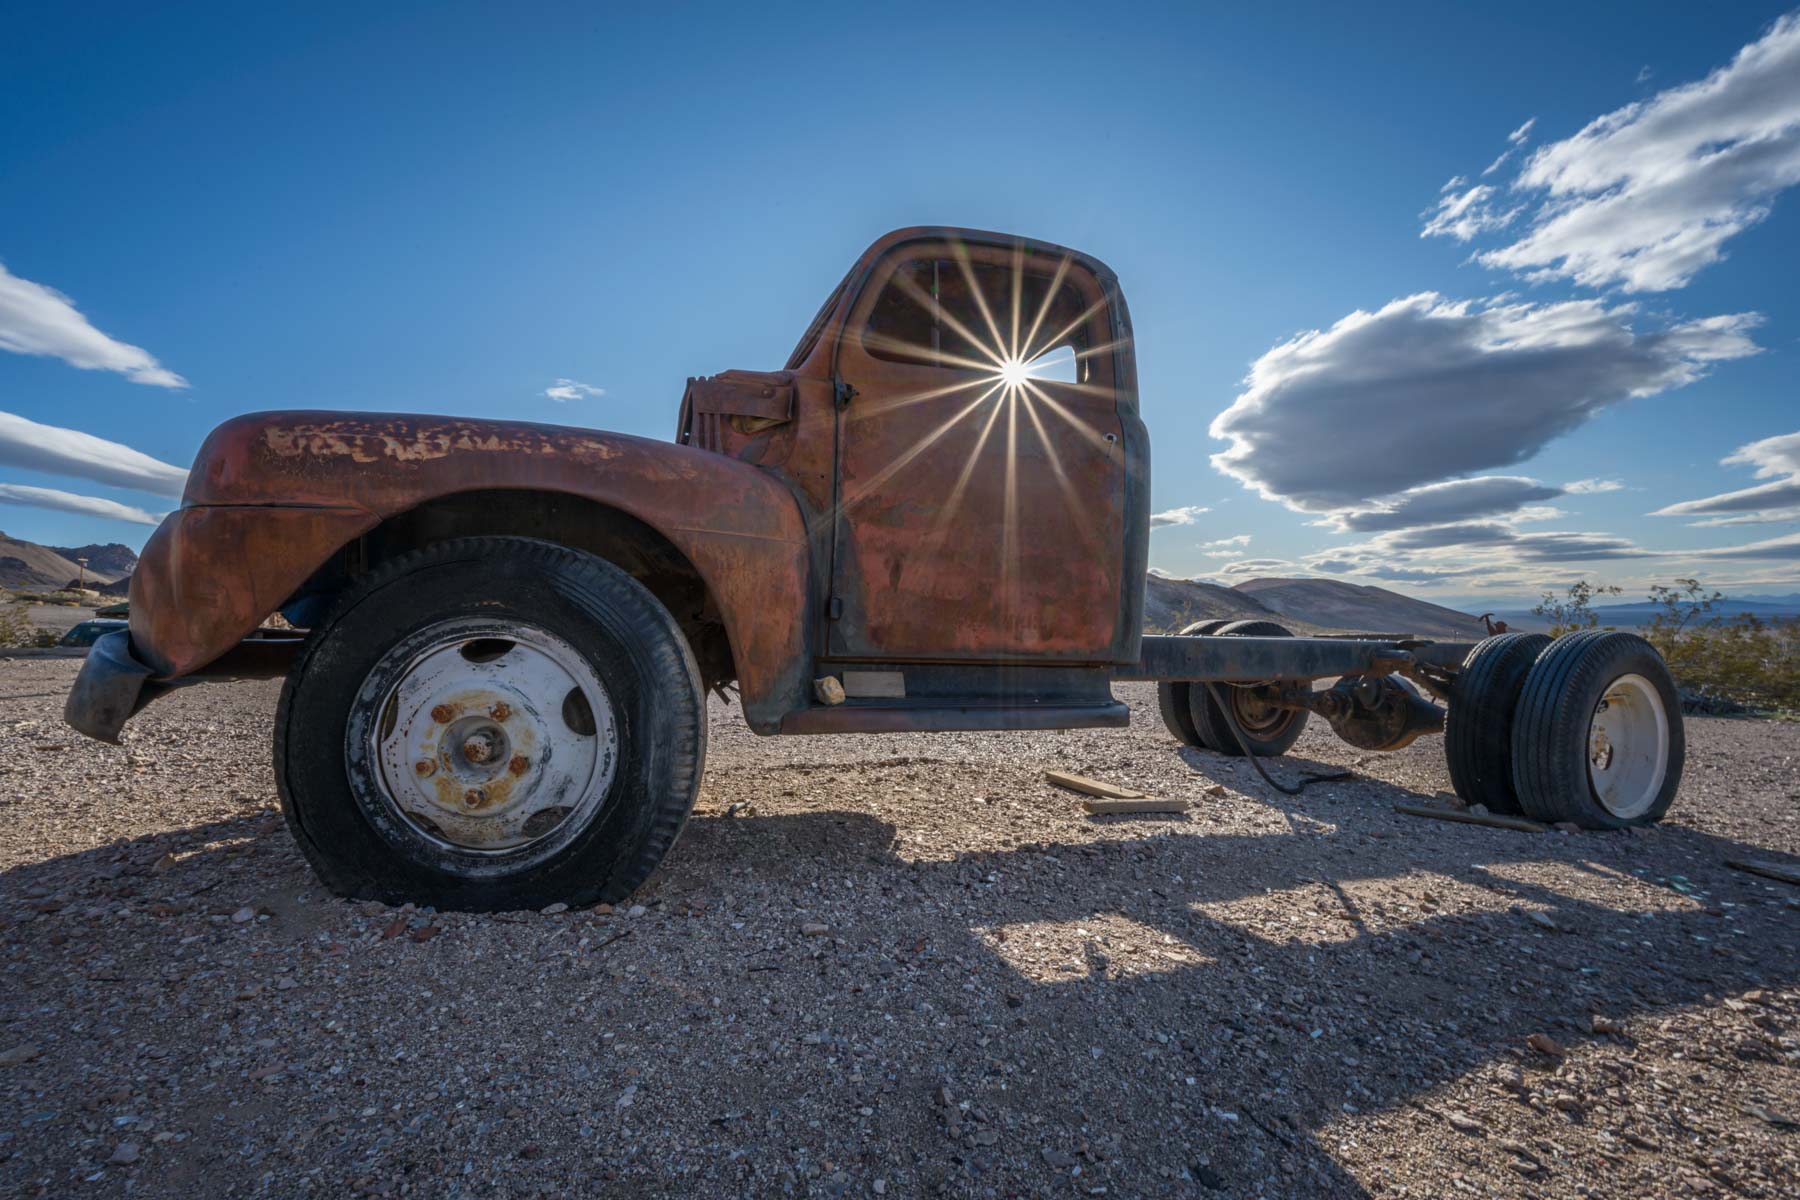 Old Truck in Rhyolite ghost town, Nevada